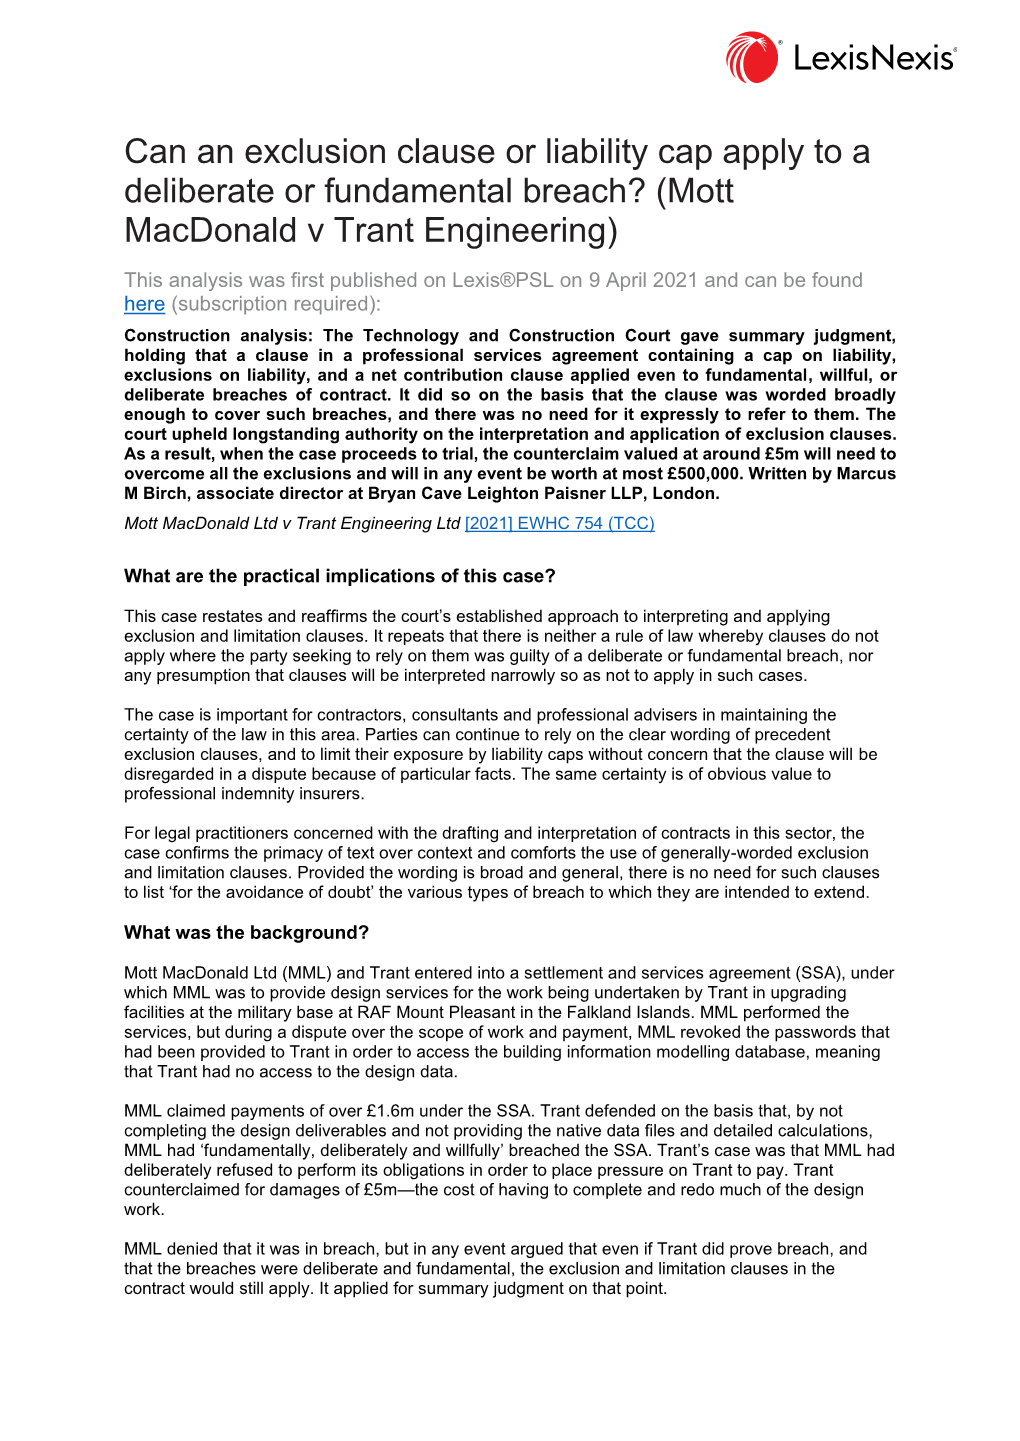 Mott Macdonald Ltd V Trant Engineering Ltd [2021] EWHC 754 (TCC)